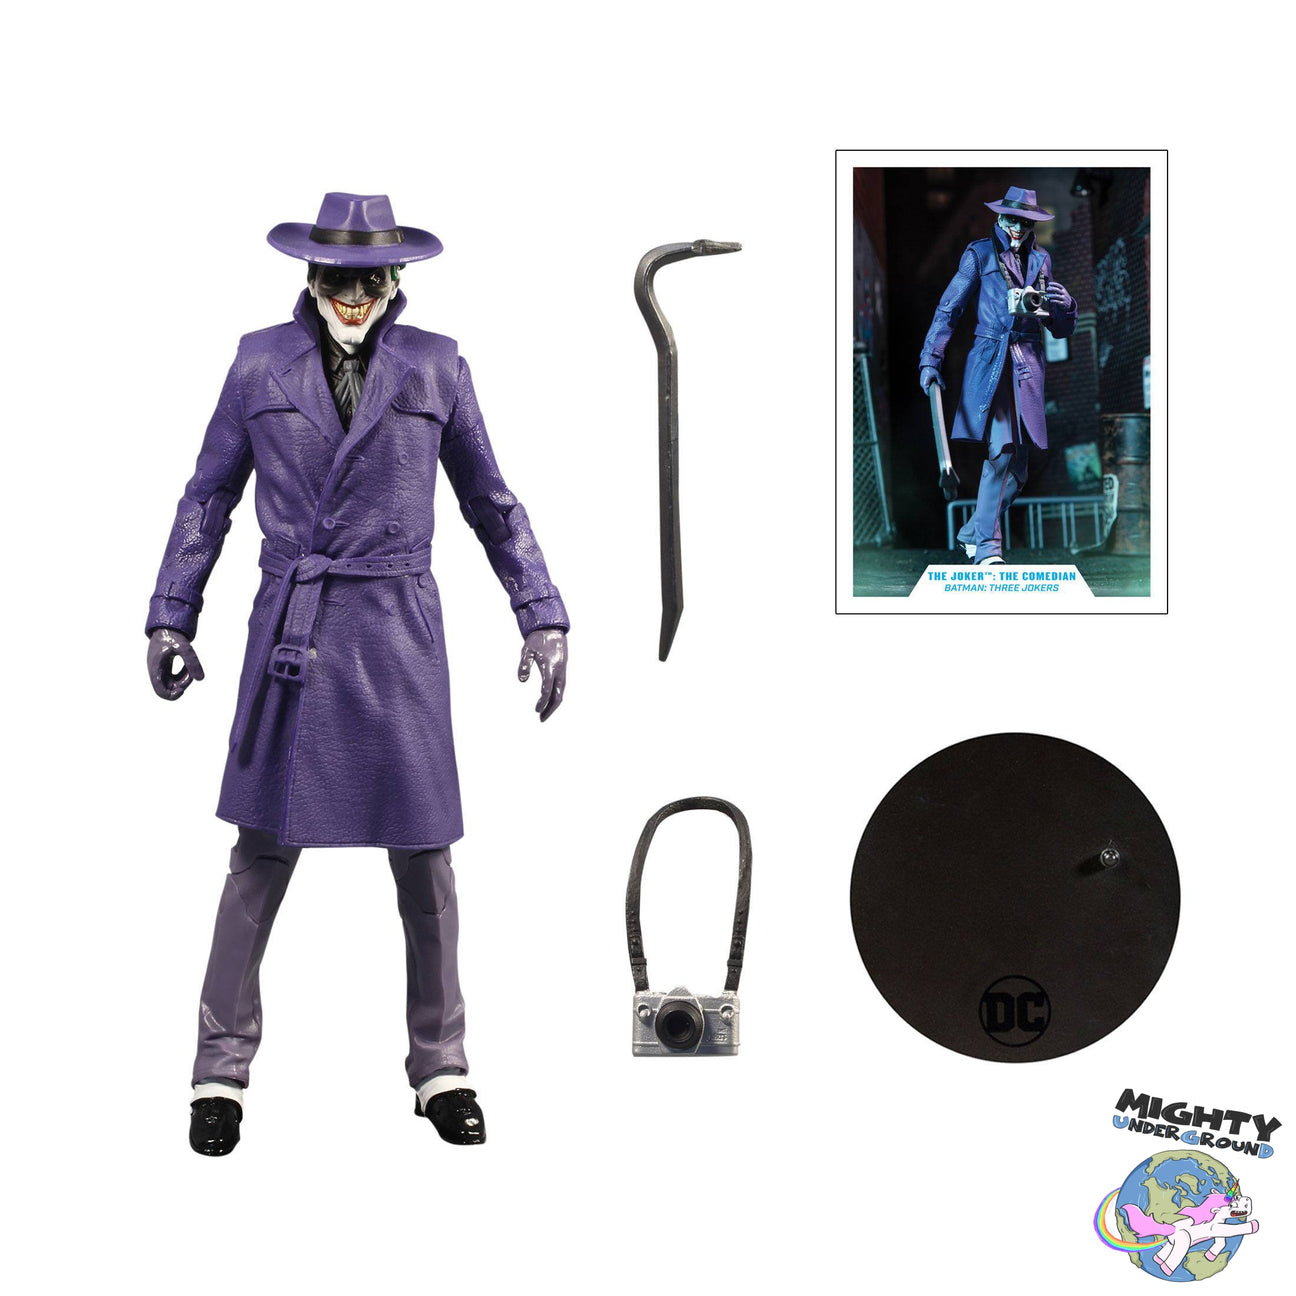 DC Multiverse The Joker: The Comedian (Batman: Three Jokers)-Actionfiguren-McFarlane Toys-Mighty Underground